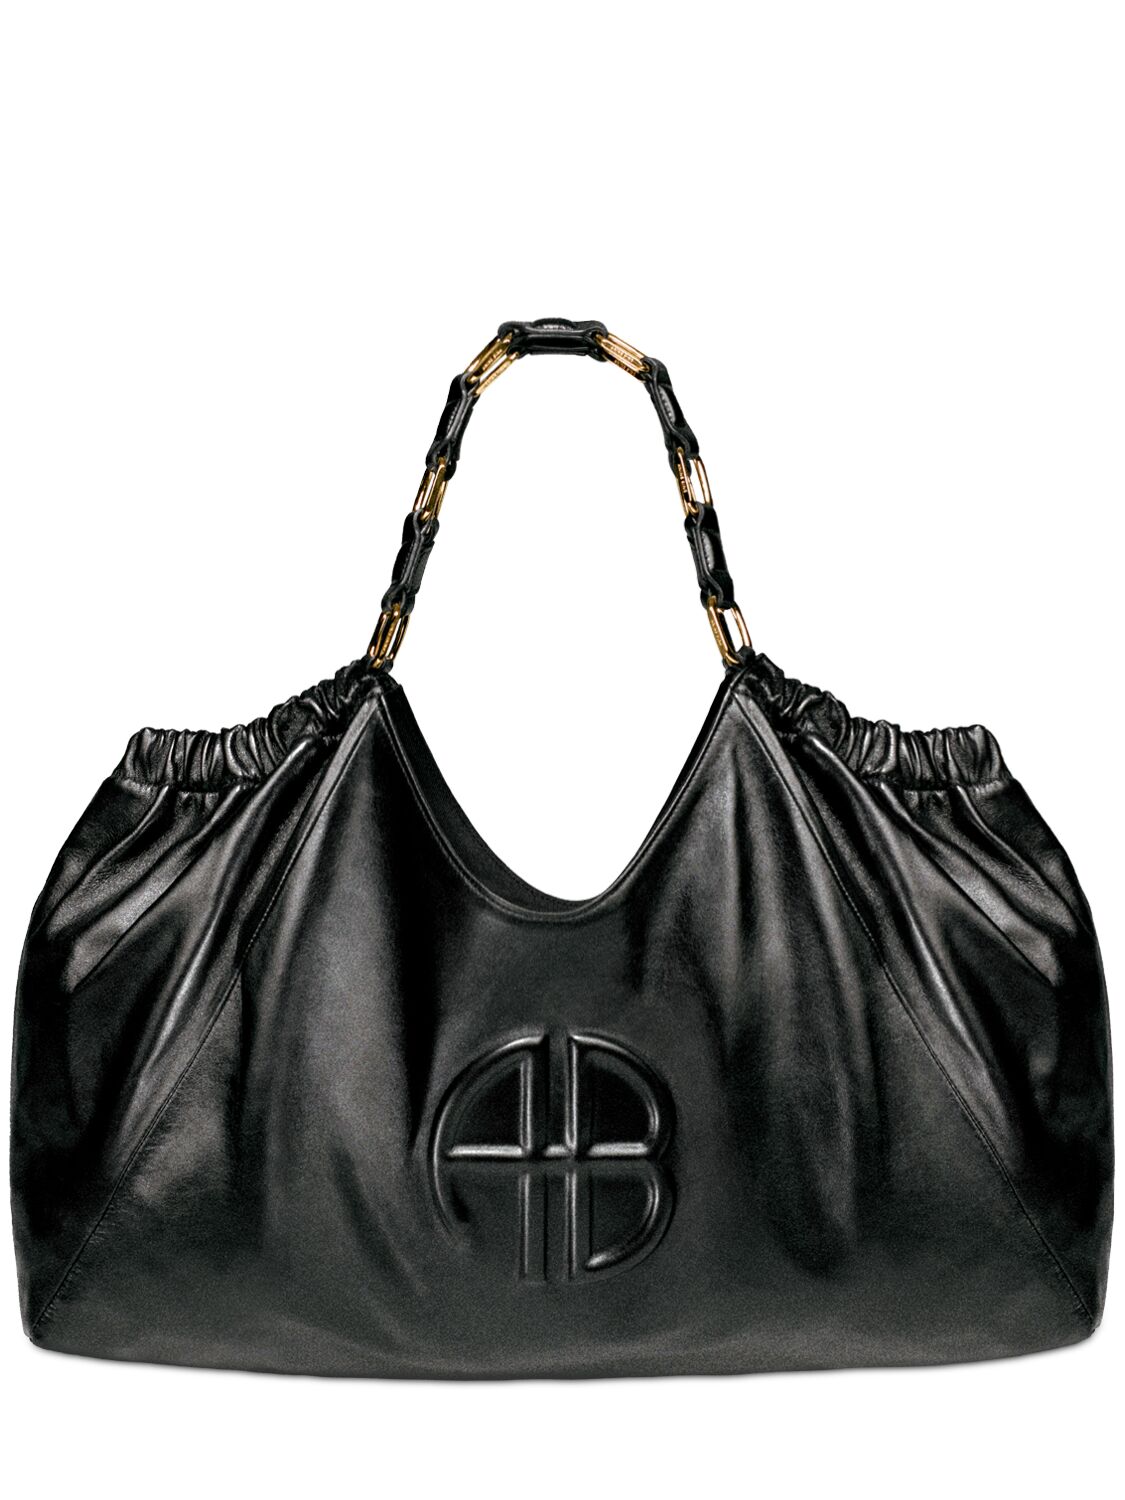 Anine Bing Kate Leather Tote Bag In Black